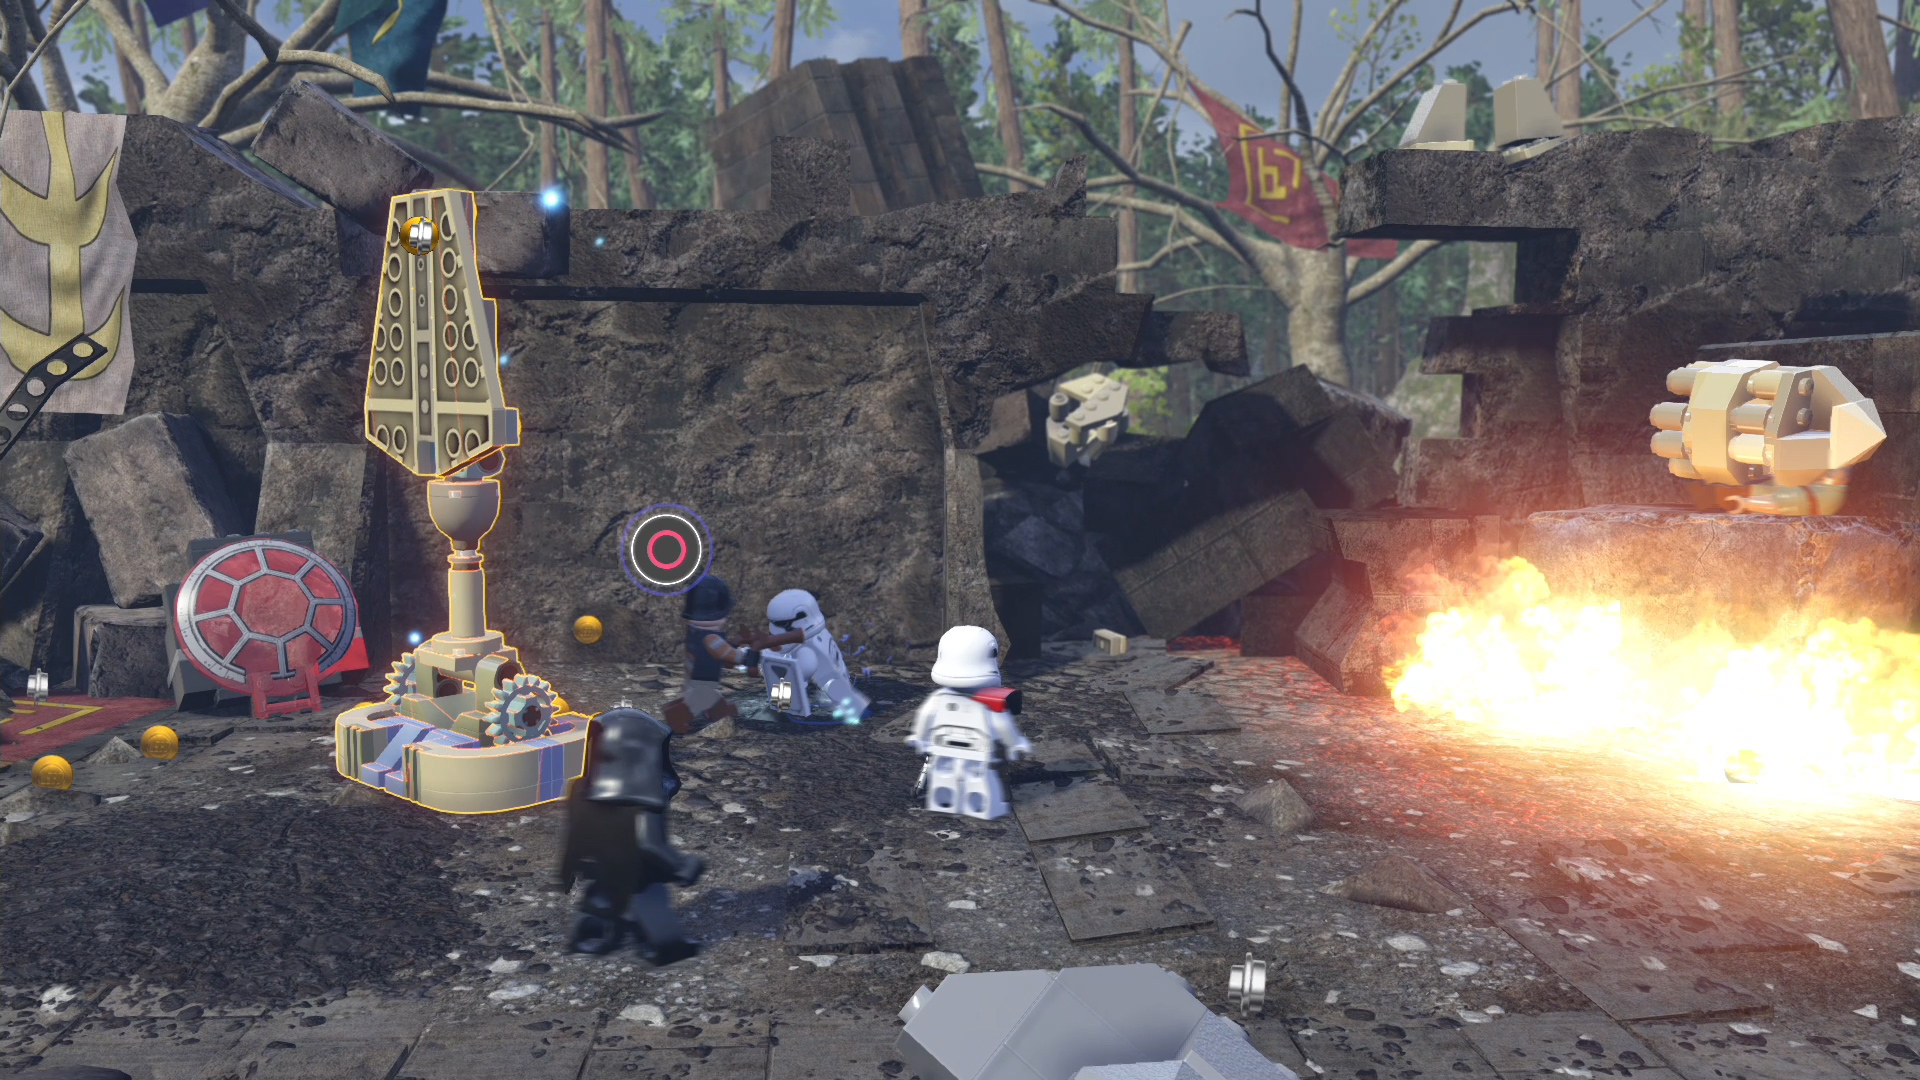 LEGO Star Wars Siege Of Takodana Lets You Play As The Bad Guys